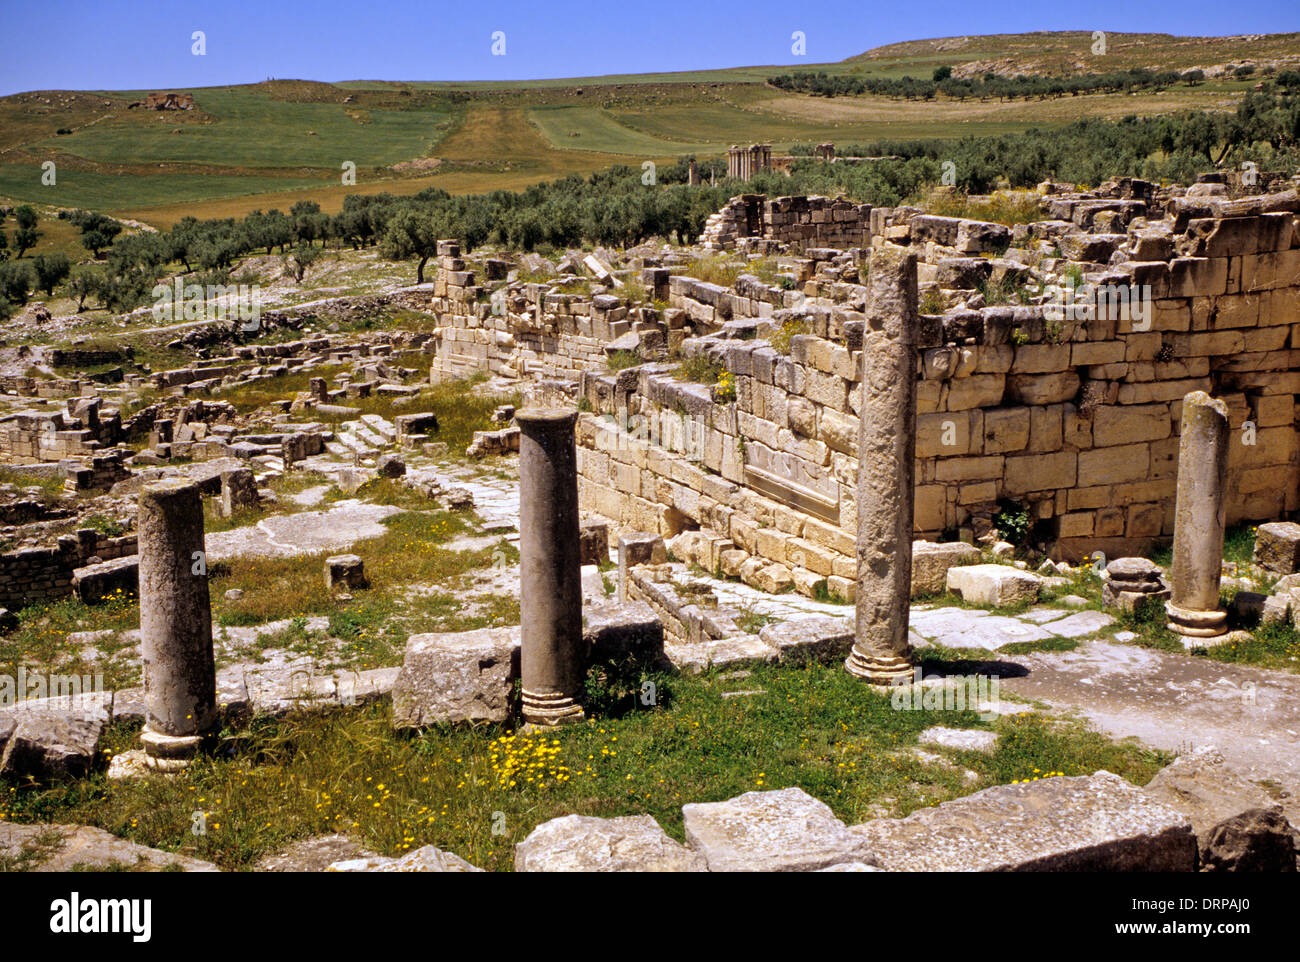 Tunesien, Dougga. Römische Ruinen. Blick auf den Tempel der Caelestis. 3.. Jahrhundert n. Chr. Olivenbäume an den Berghängen. Stockfoto